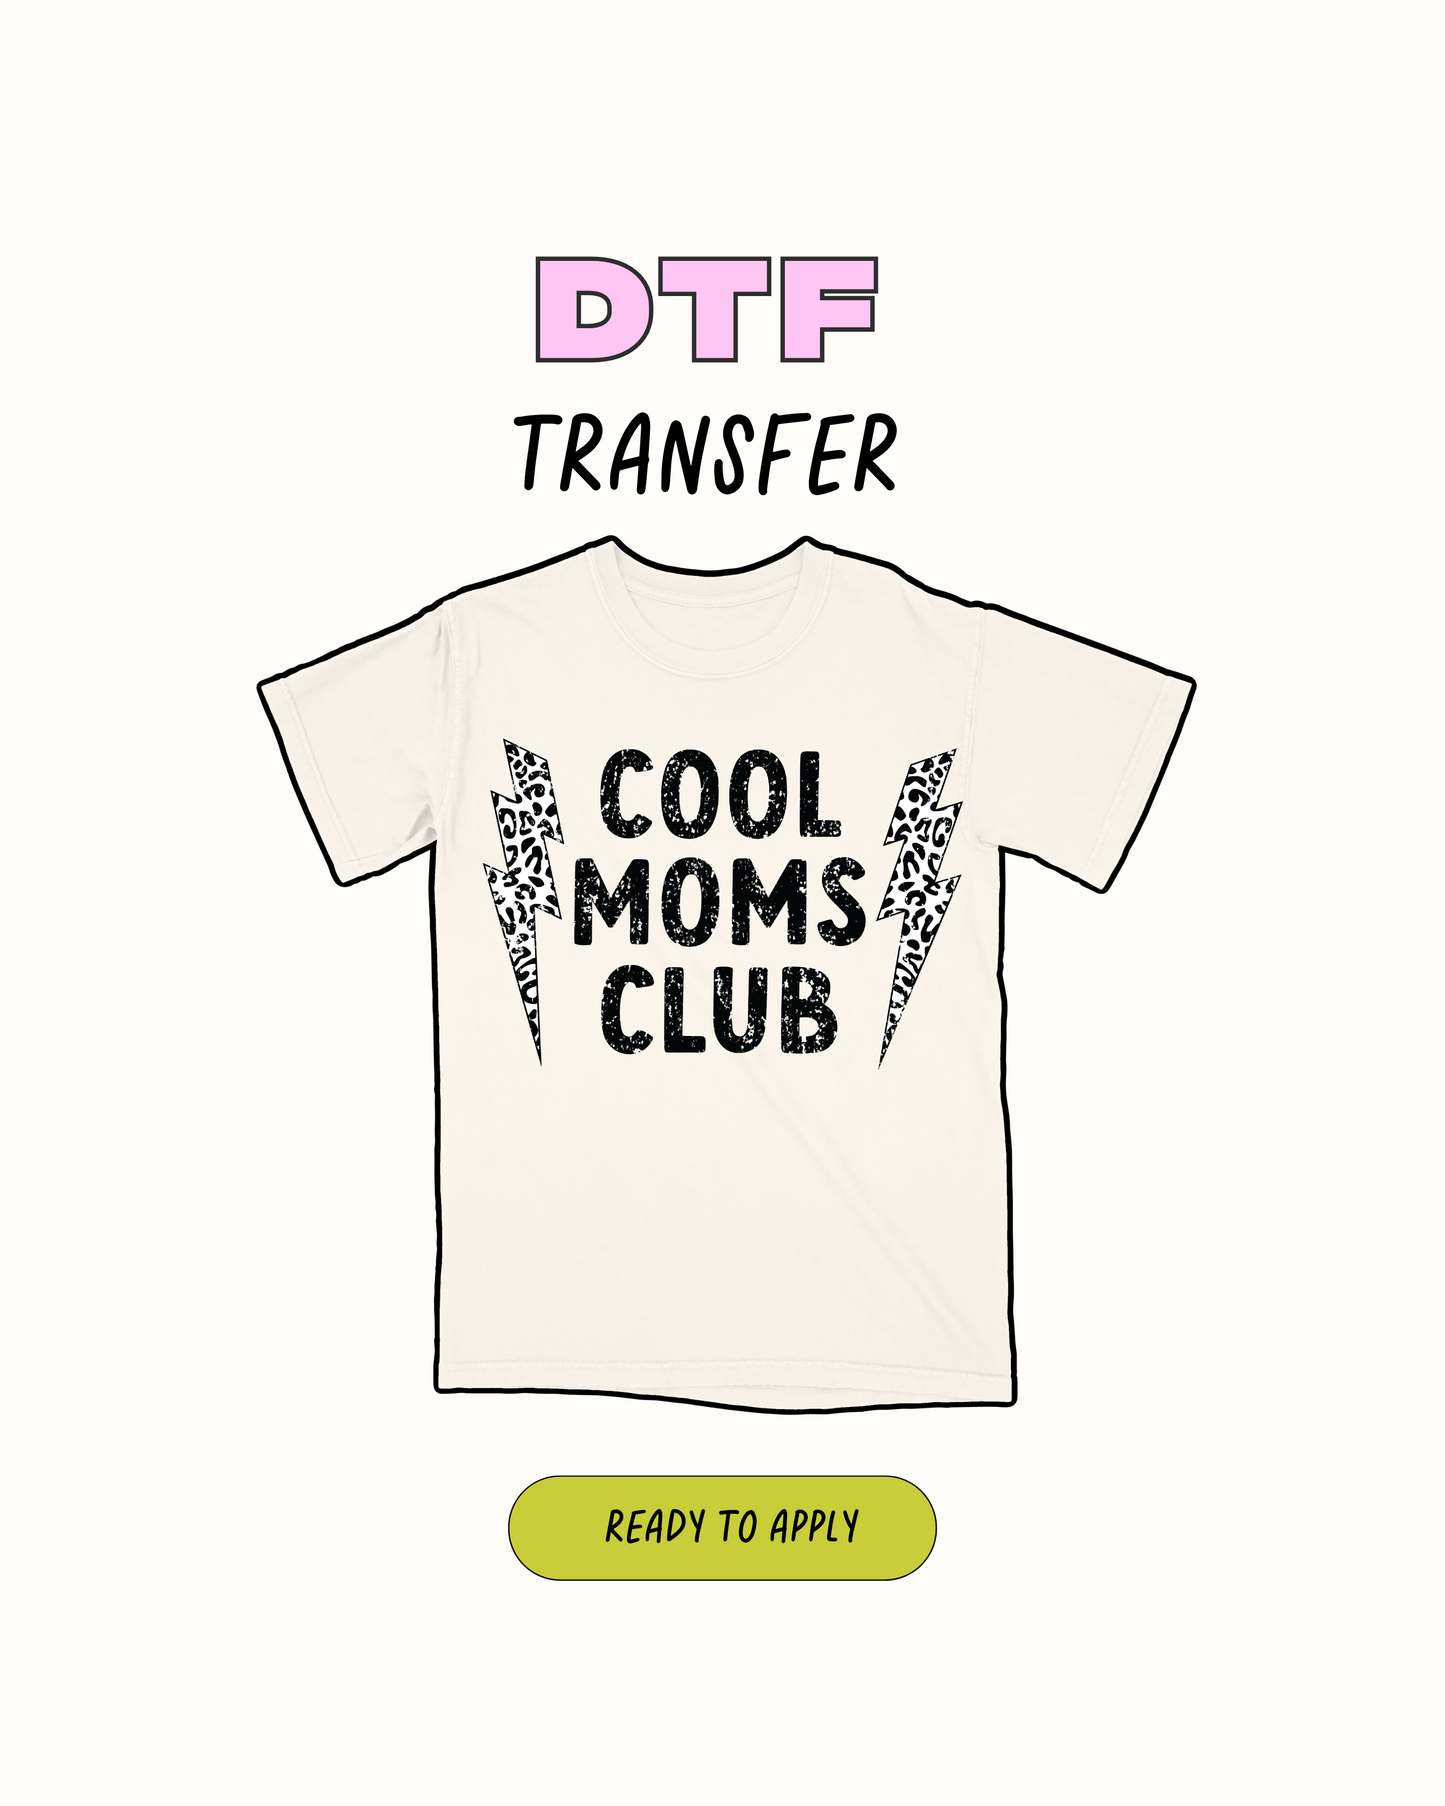 Cool Moms Club - DTF Transfer